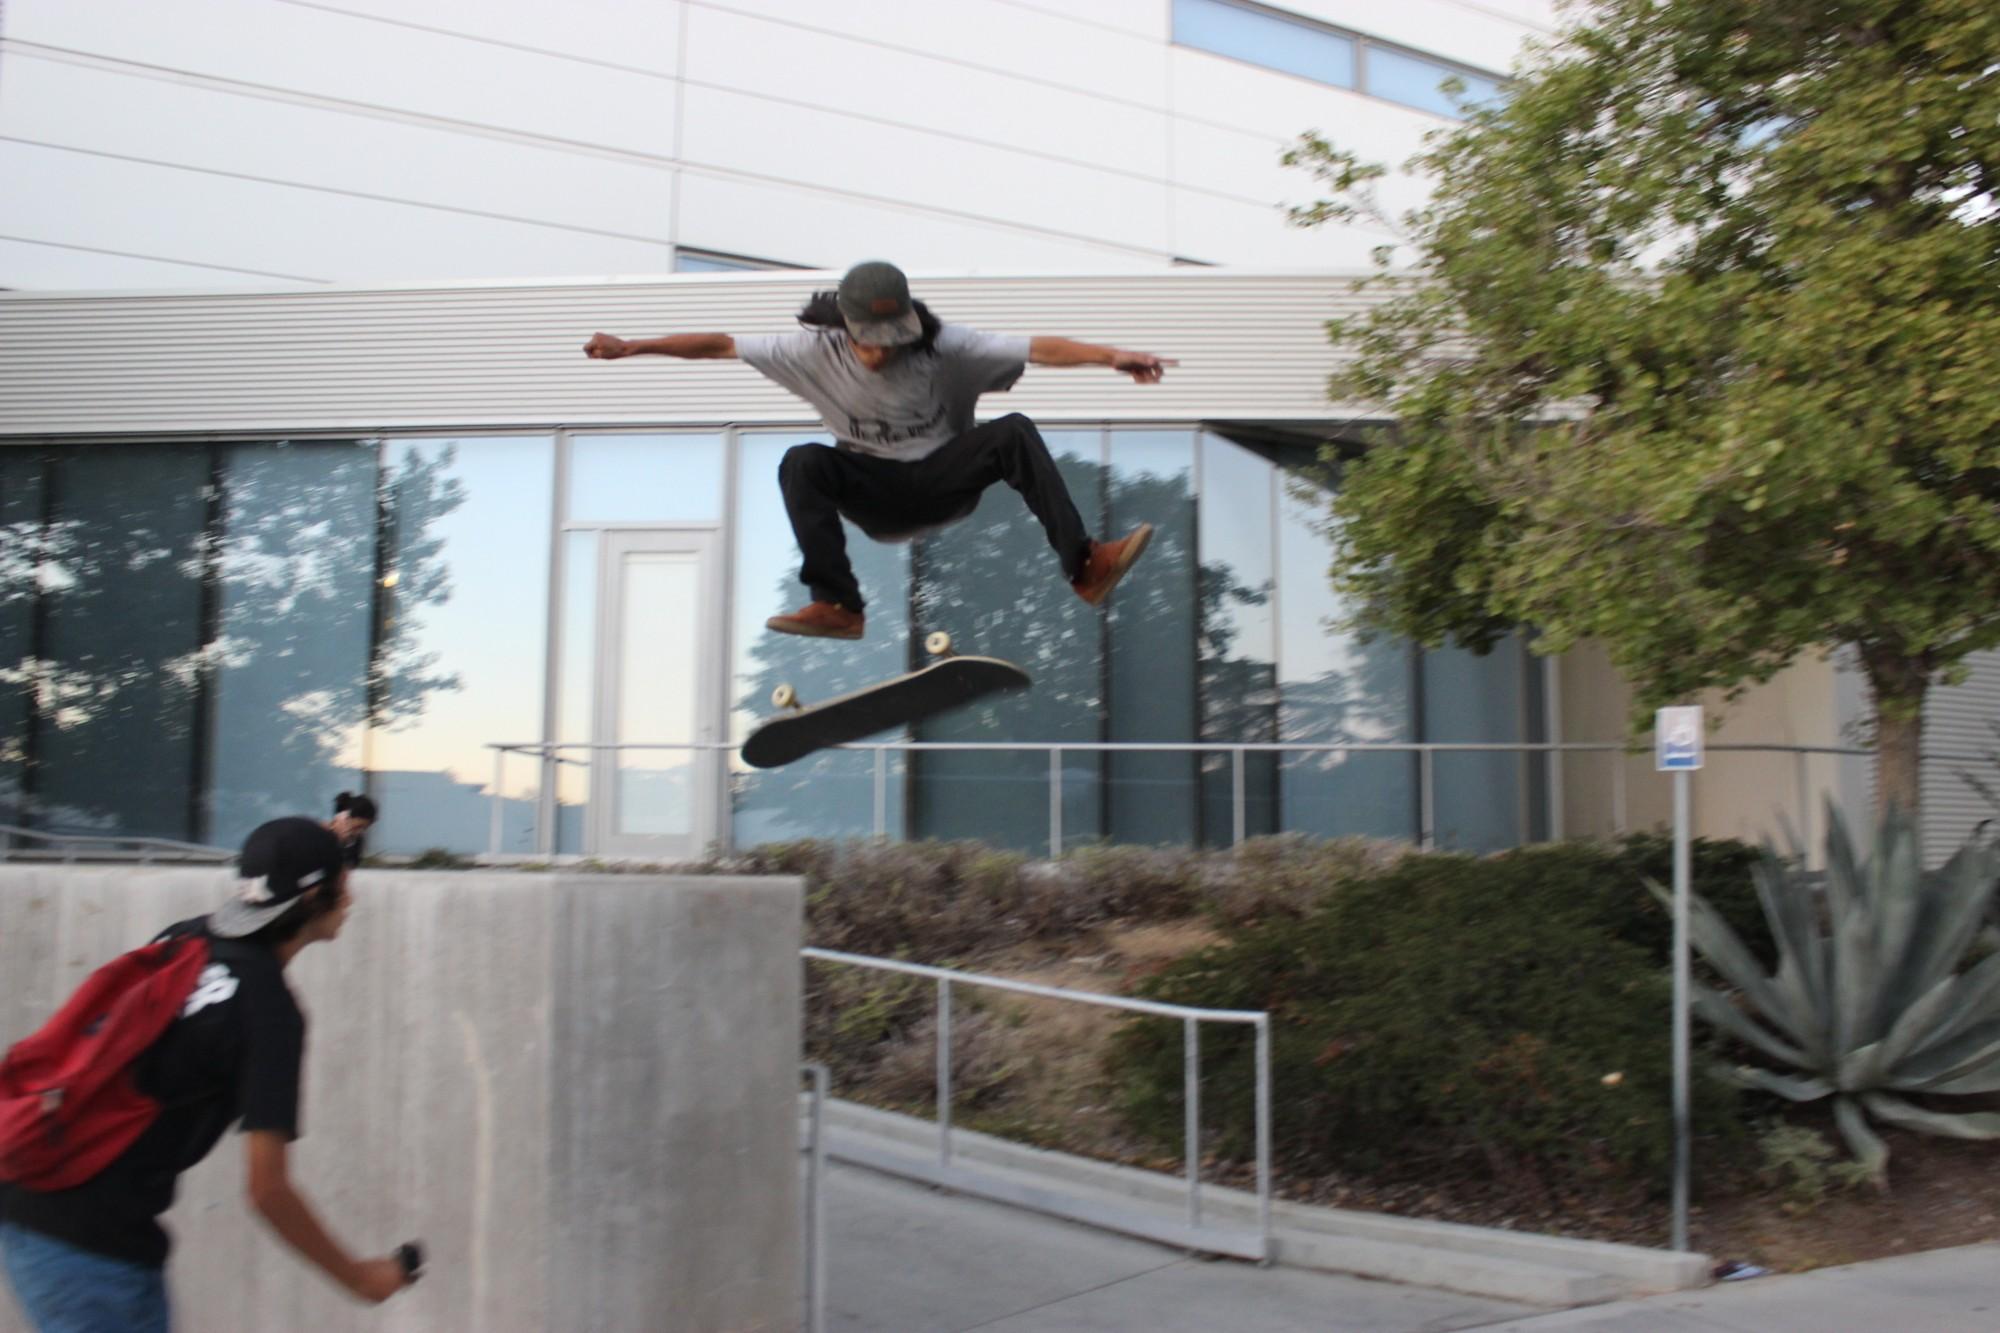 skateboarder+attempts+kickflip